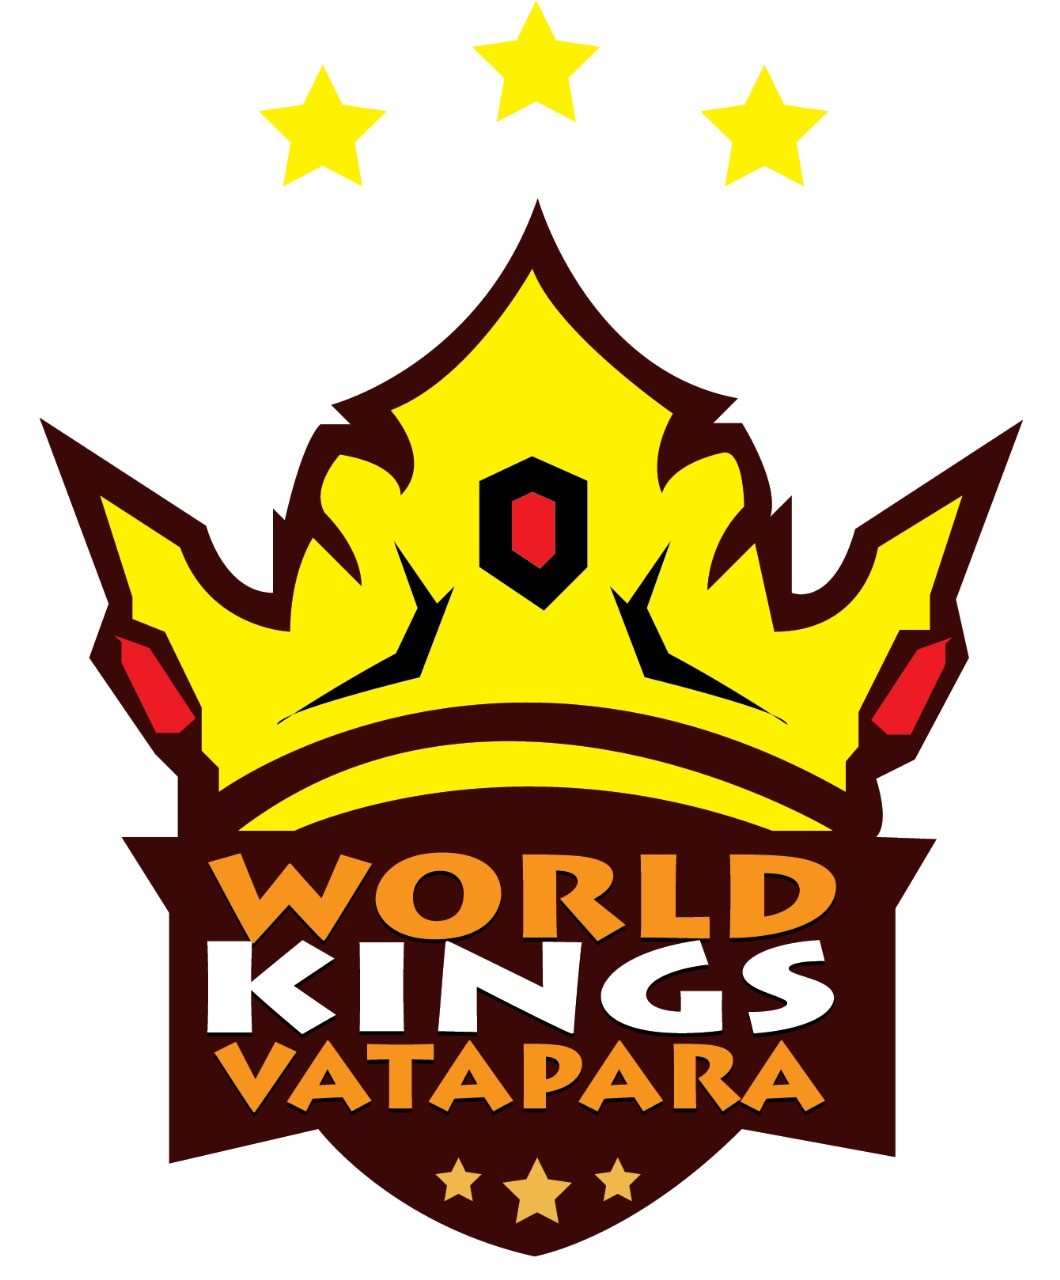 WORLD KINGS VATAPARA